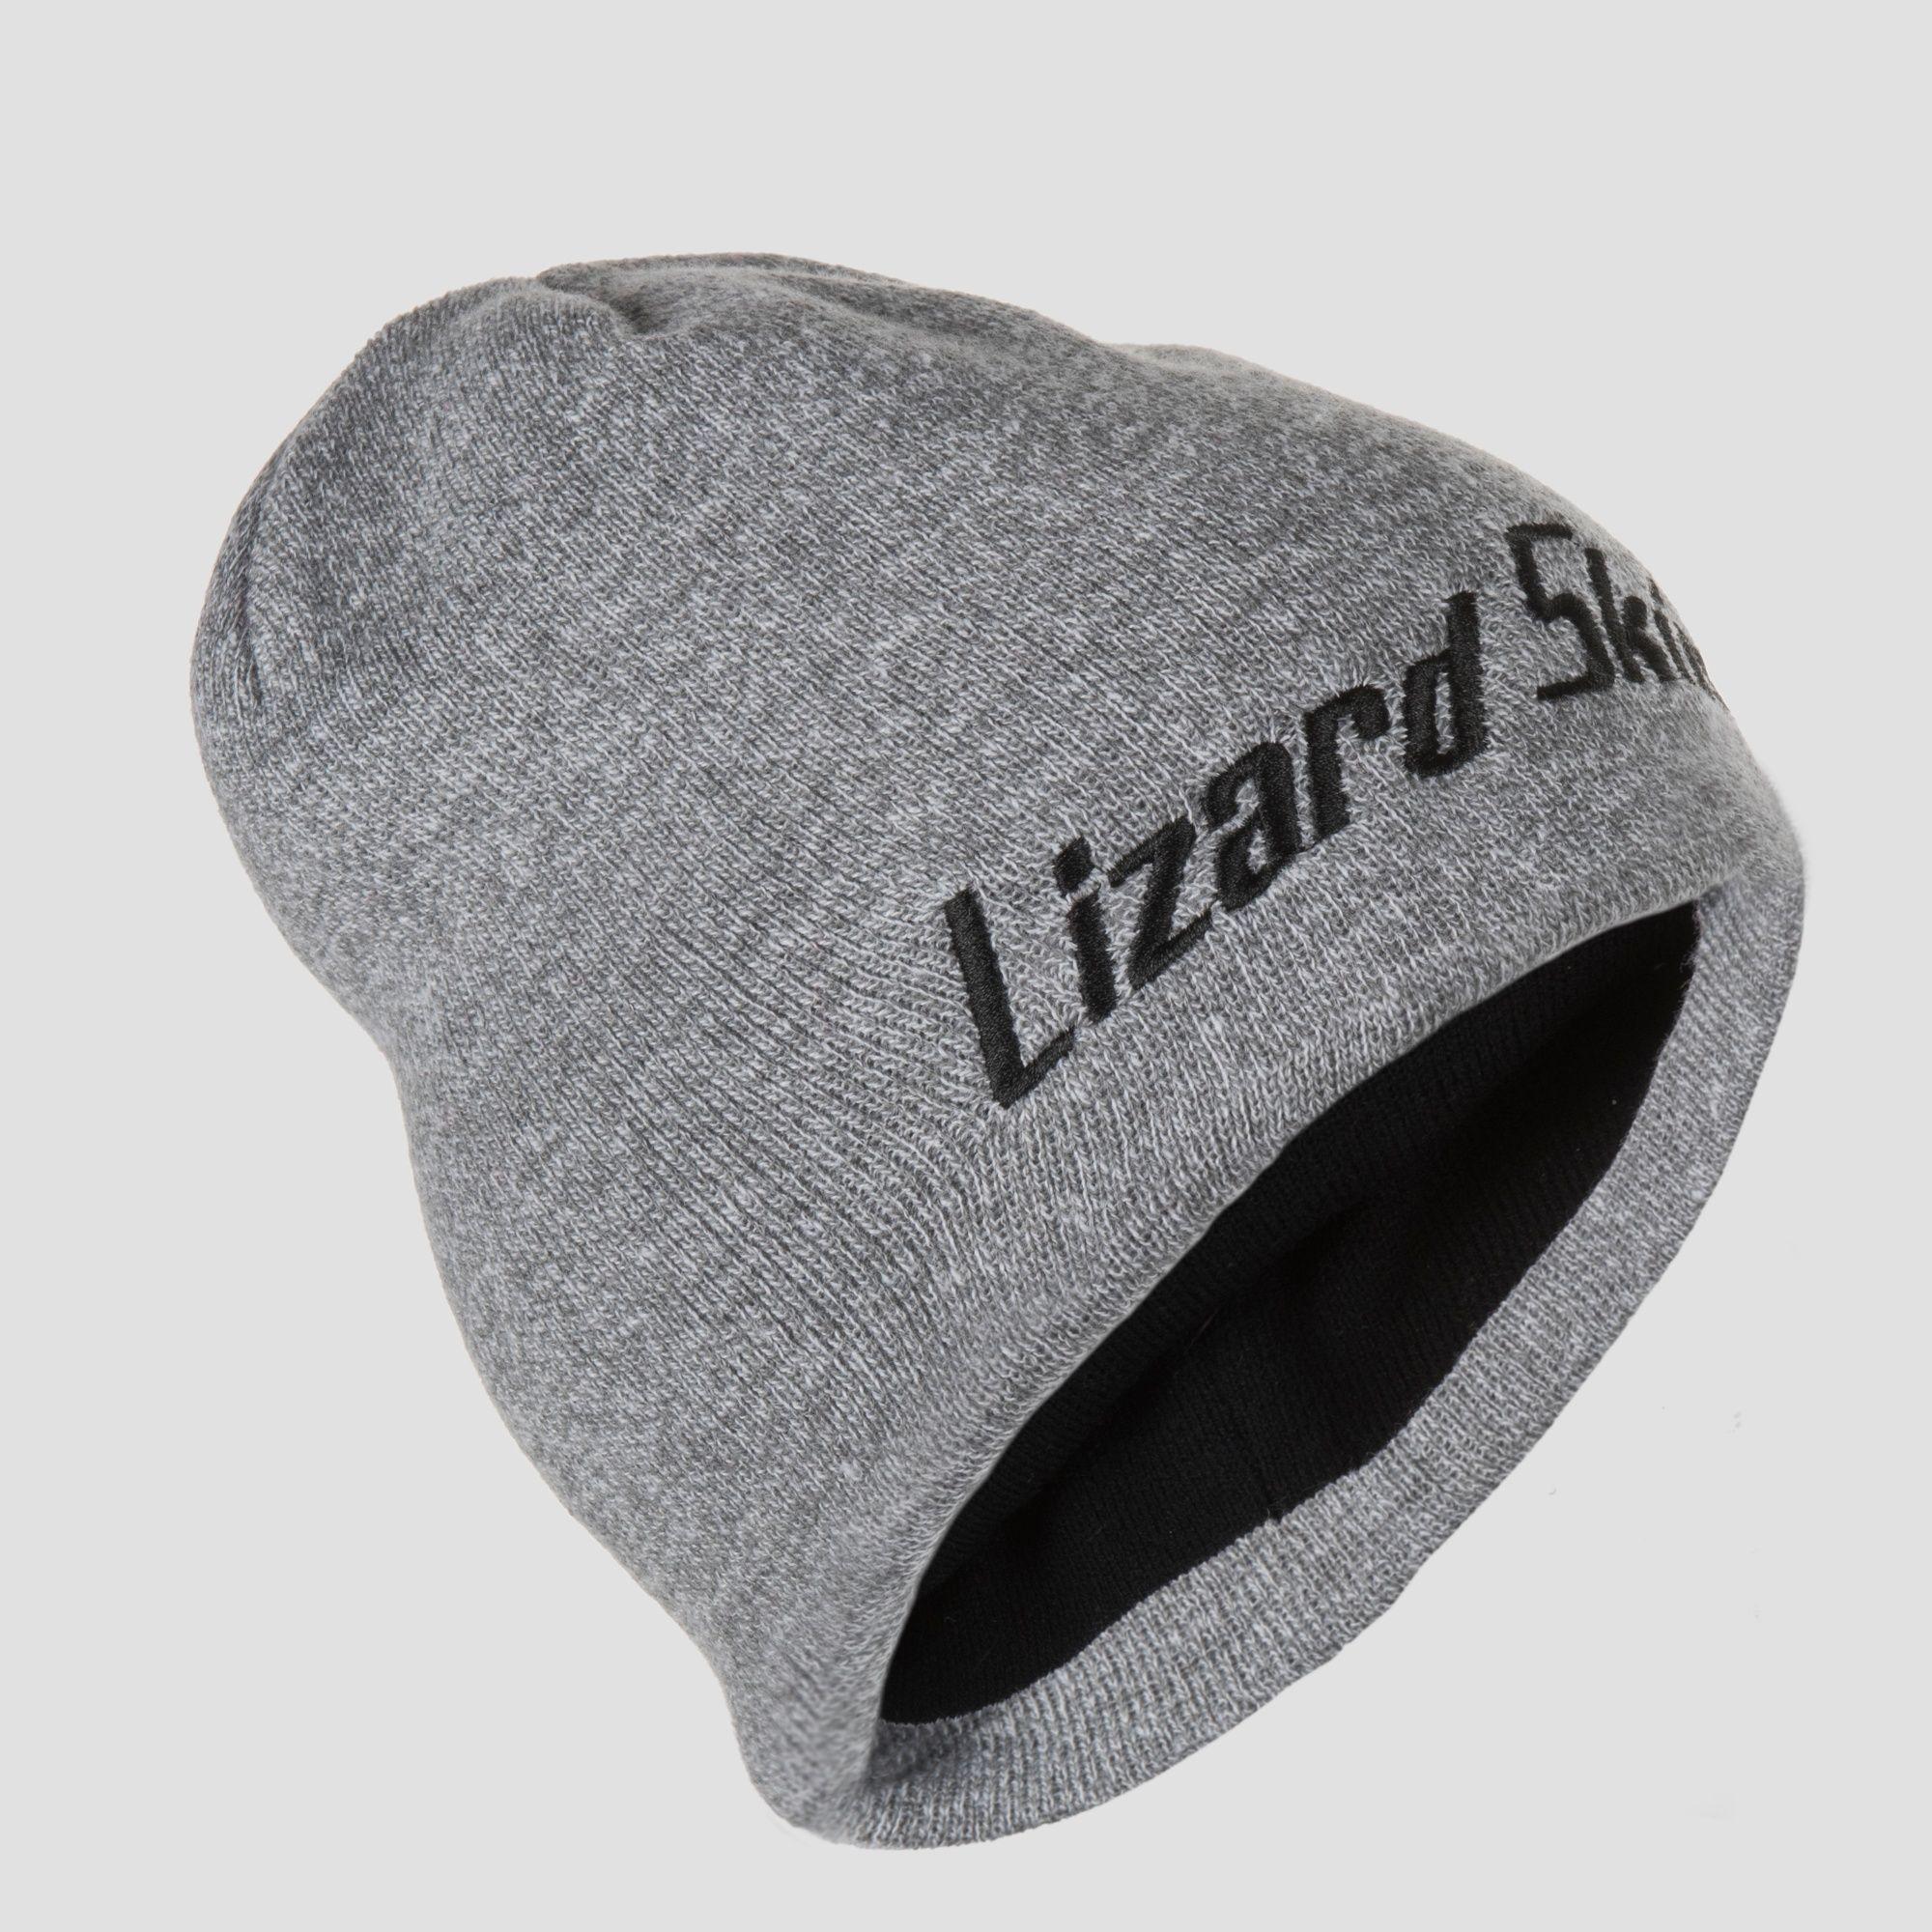 Lizard Sports Logo - Lizard Skins Sports | Lizard Skins Beanie - Gray Text Logo